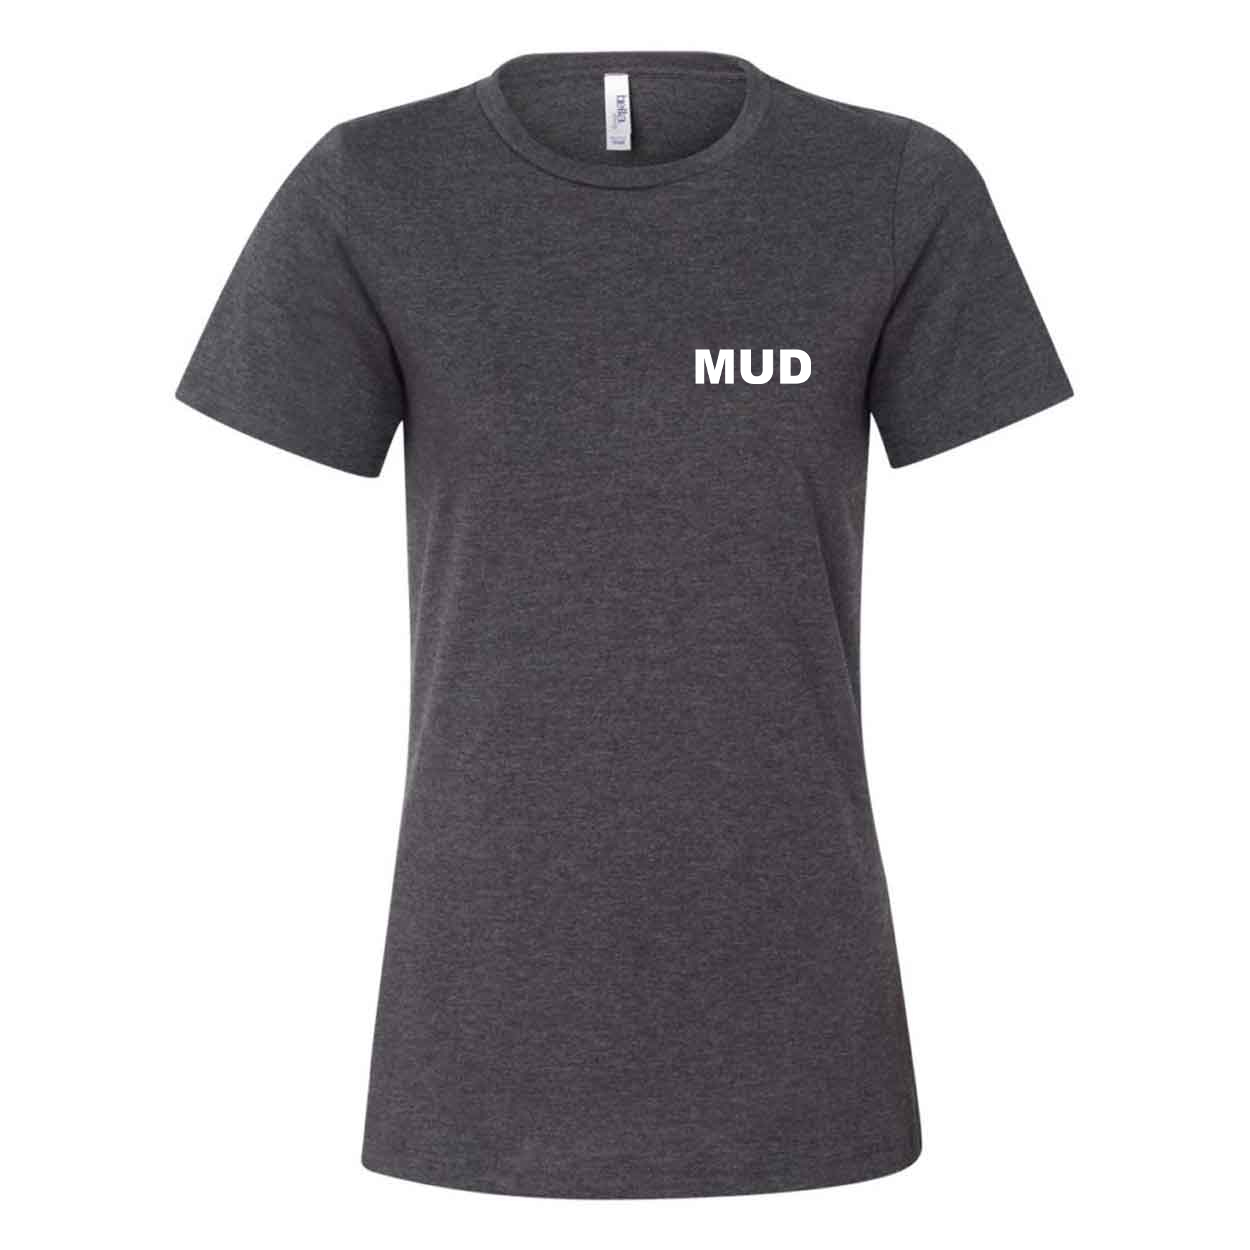 Mud Brand Logo Women's Night Out Relaxed Jersey T-Shirt Dark Gray Heather